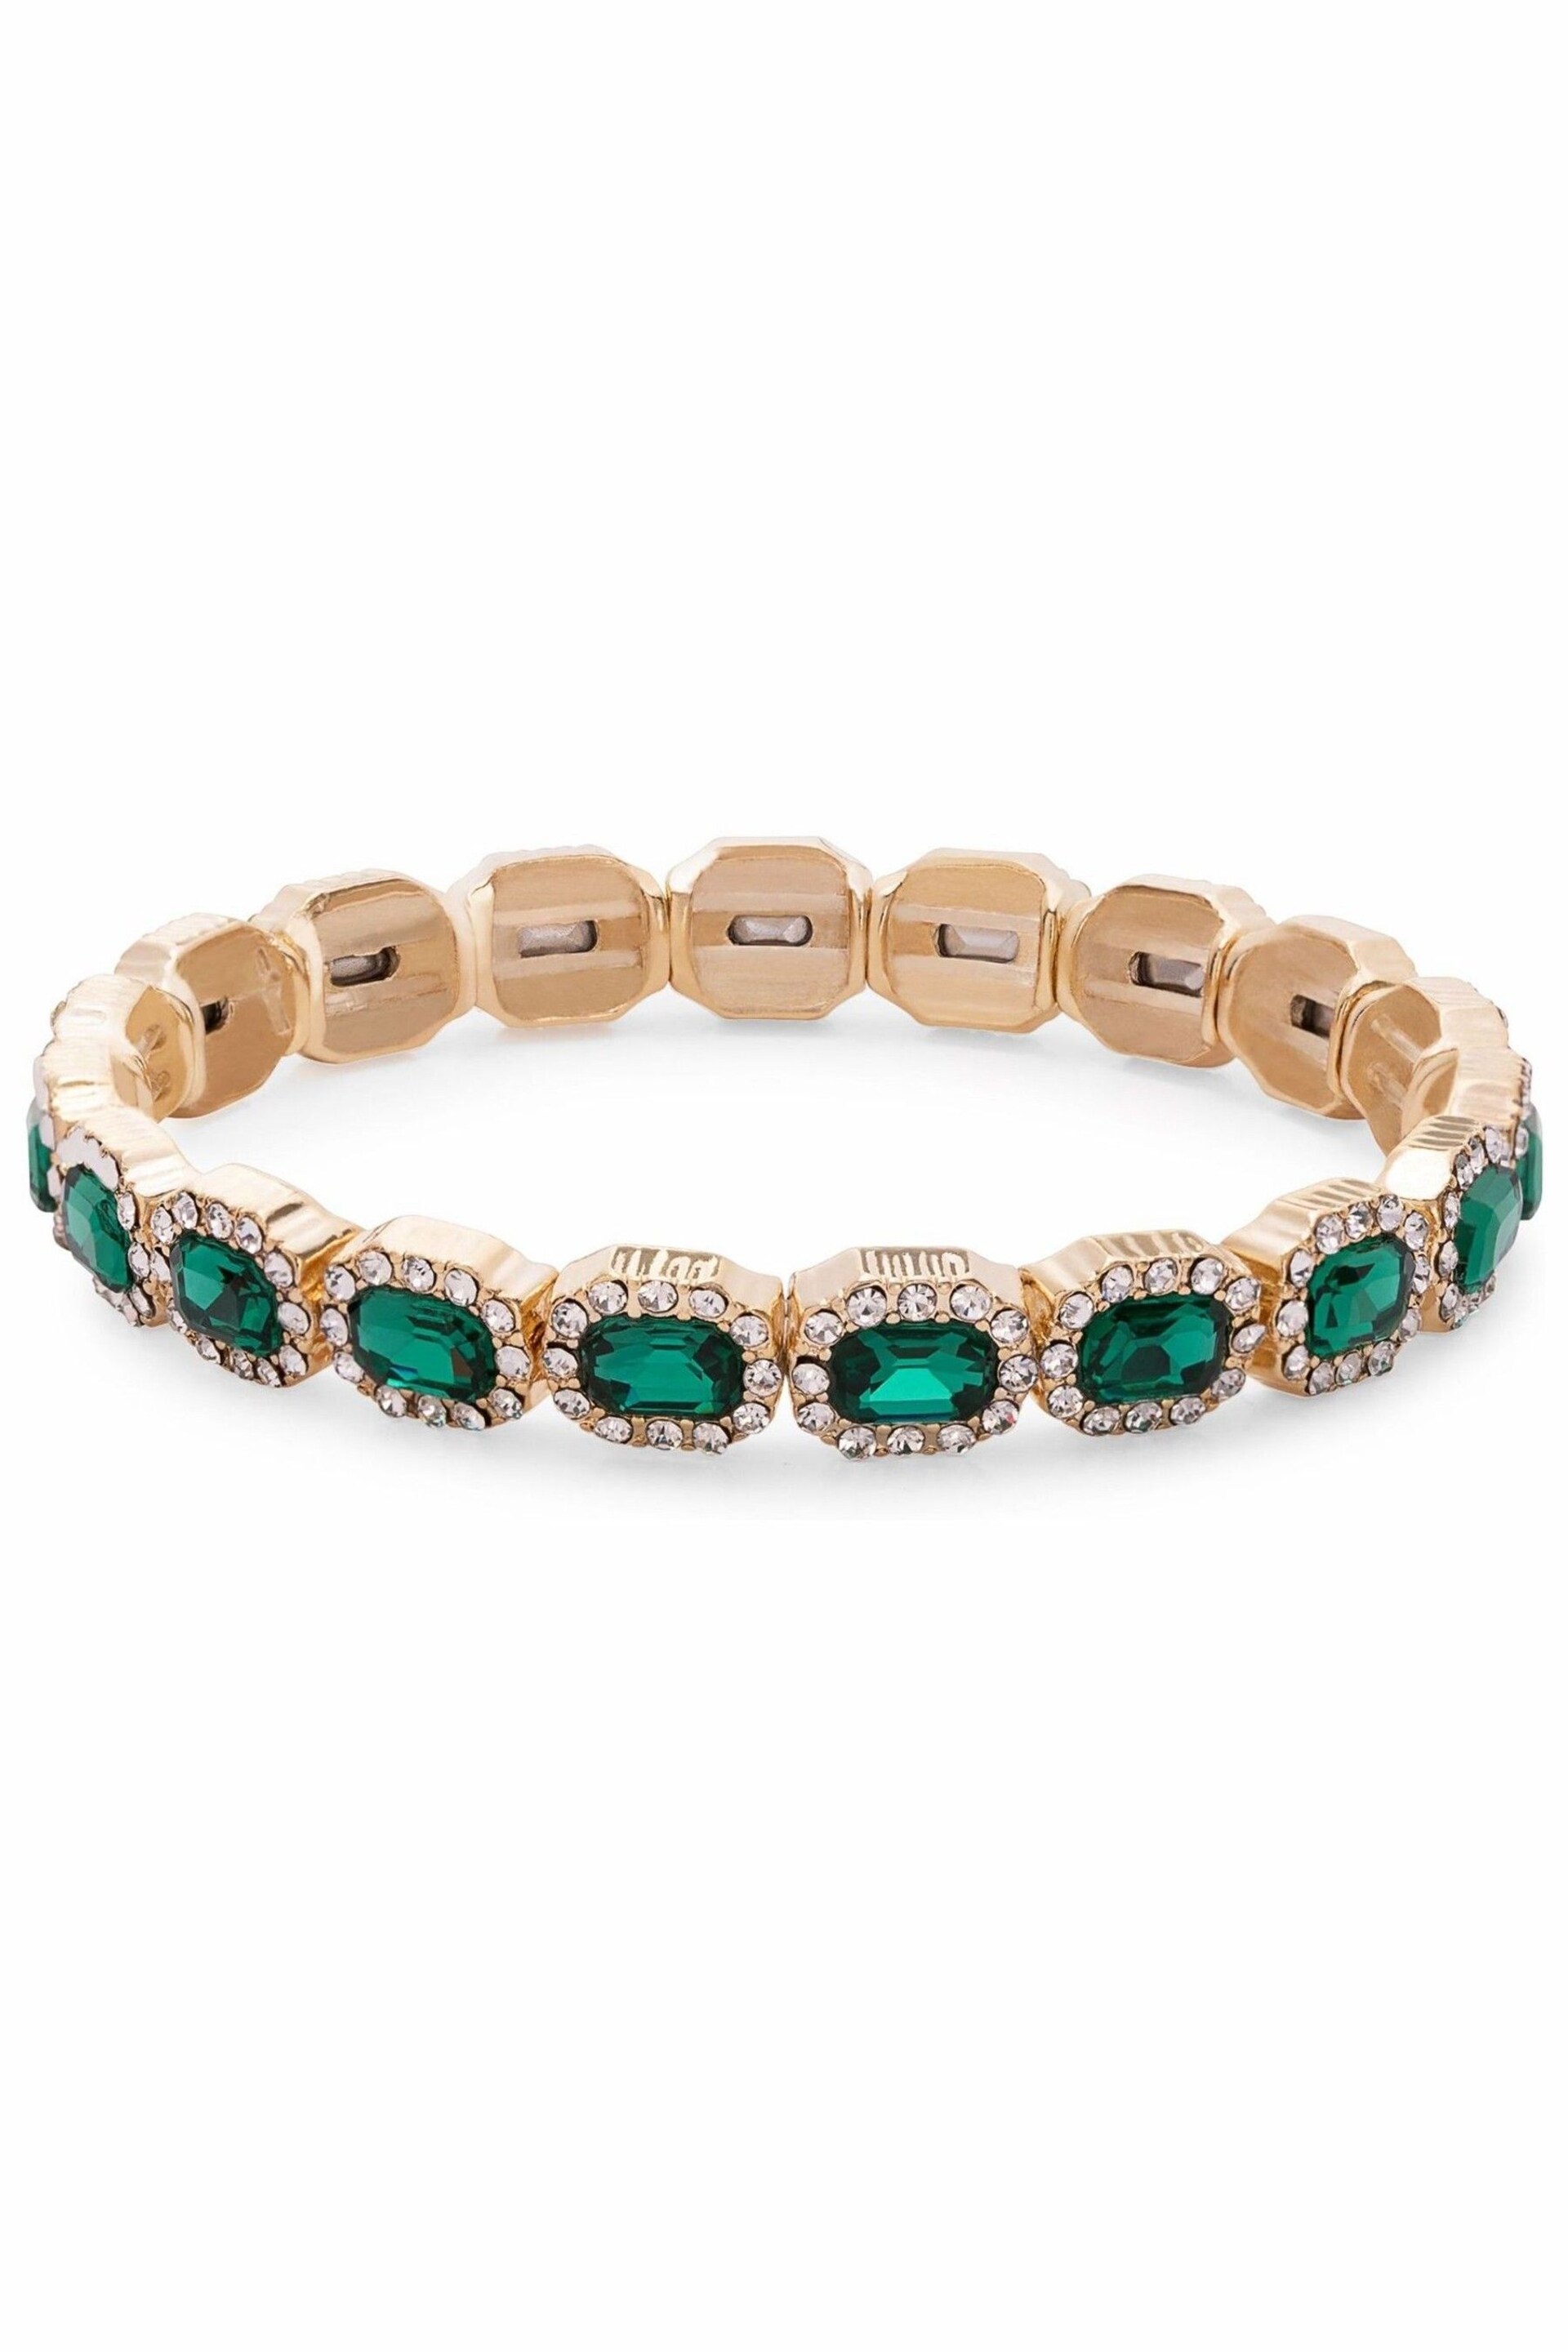 Jon Richard Green Emerald Crystal Rectangle Stretch Bracelet - Image 1 of 1